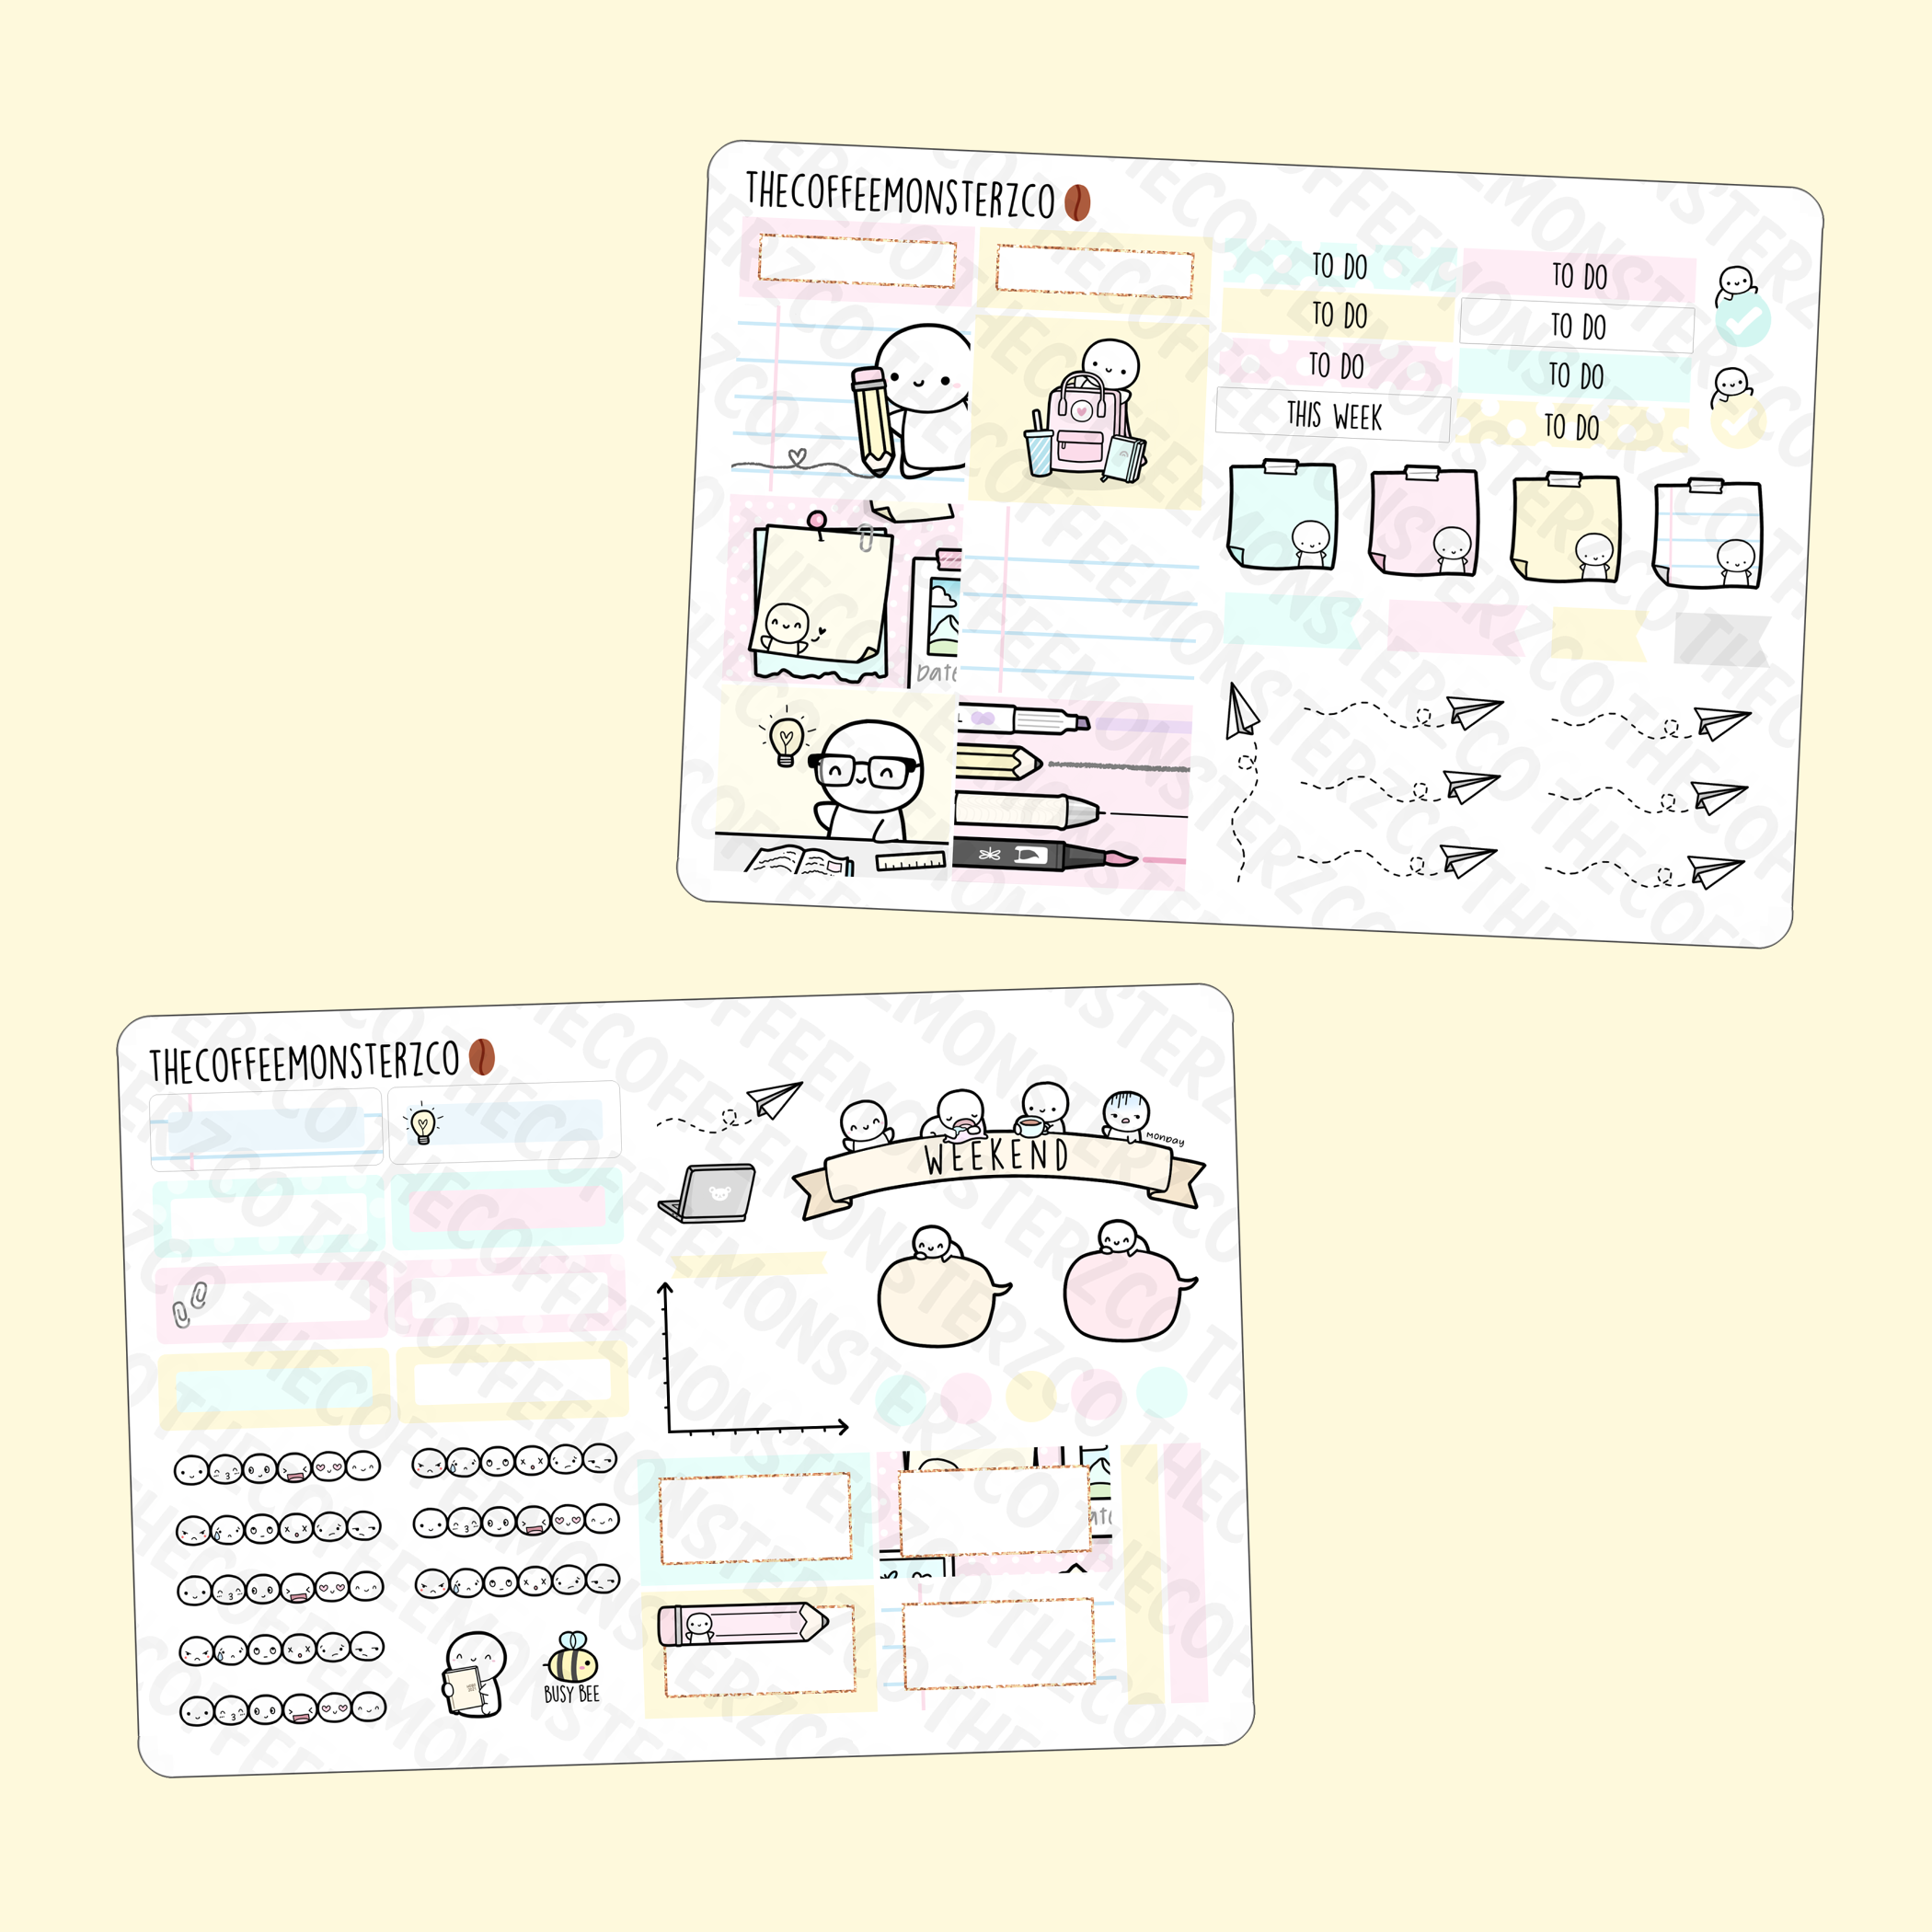 Movie Night Hobonichi Cousin Weekly Sticker Kit – Sweet T. Plans